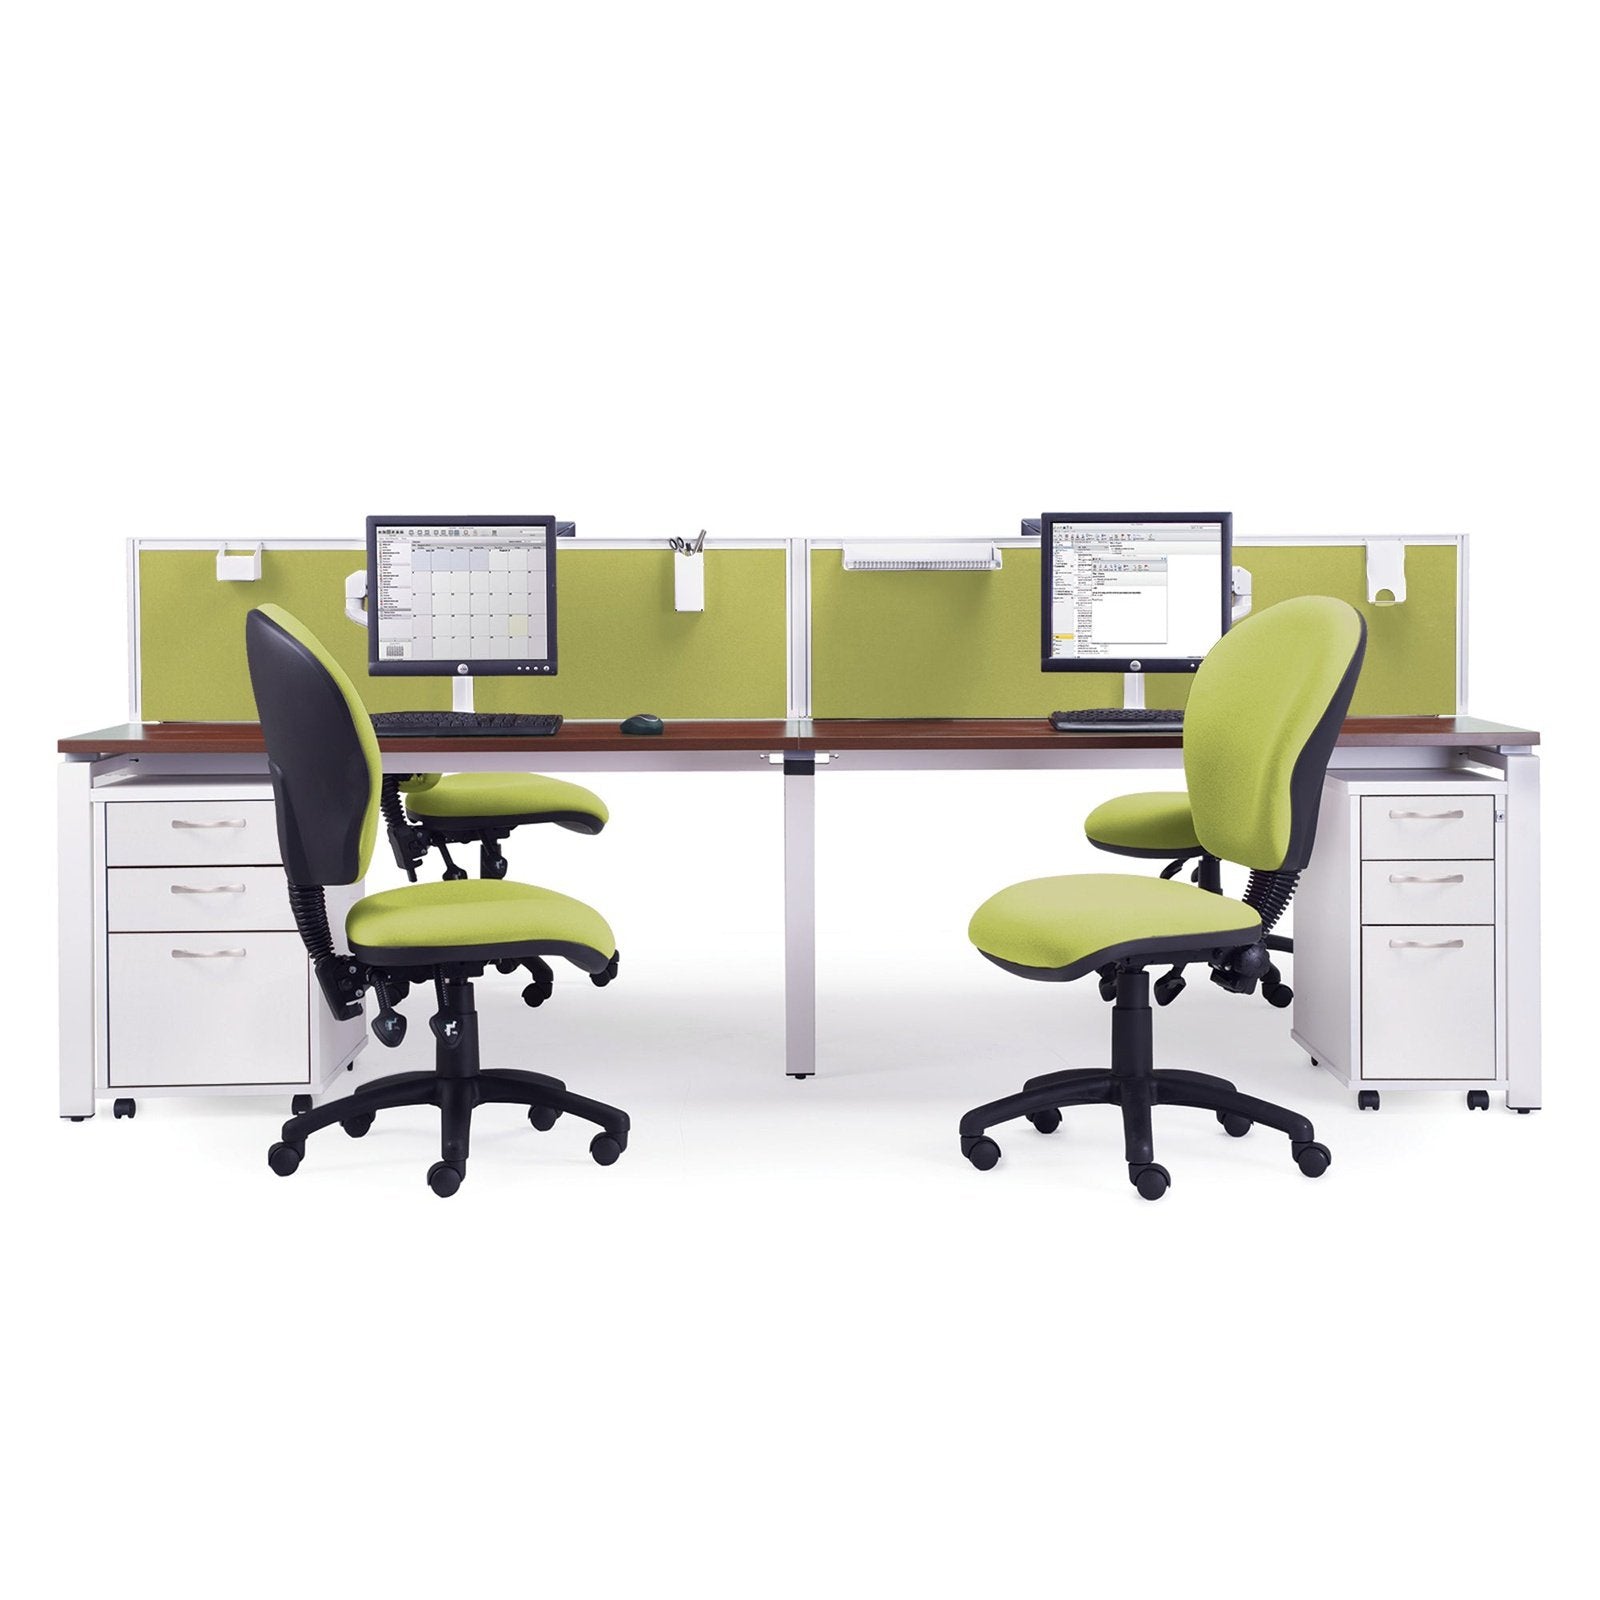 Adapt single desk 800 deep - Office Products Online